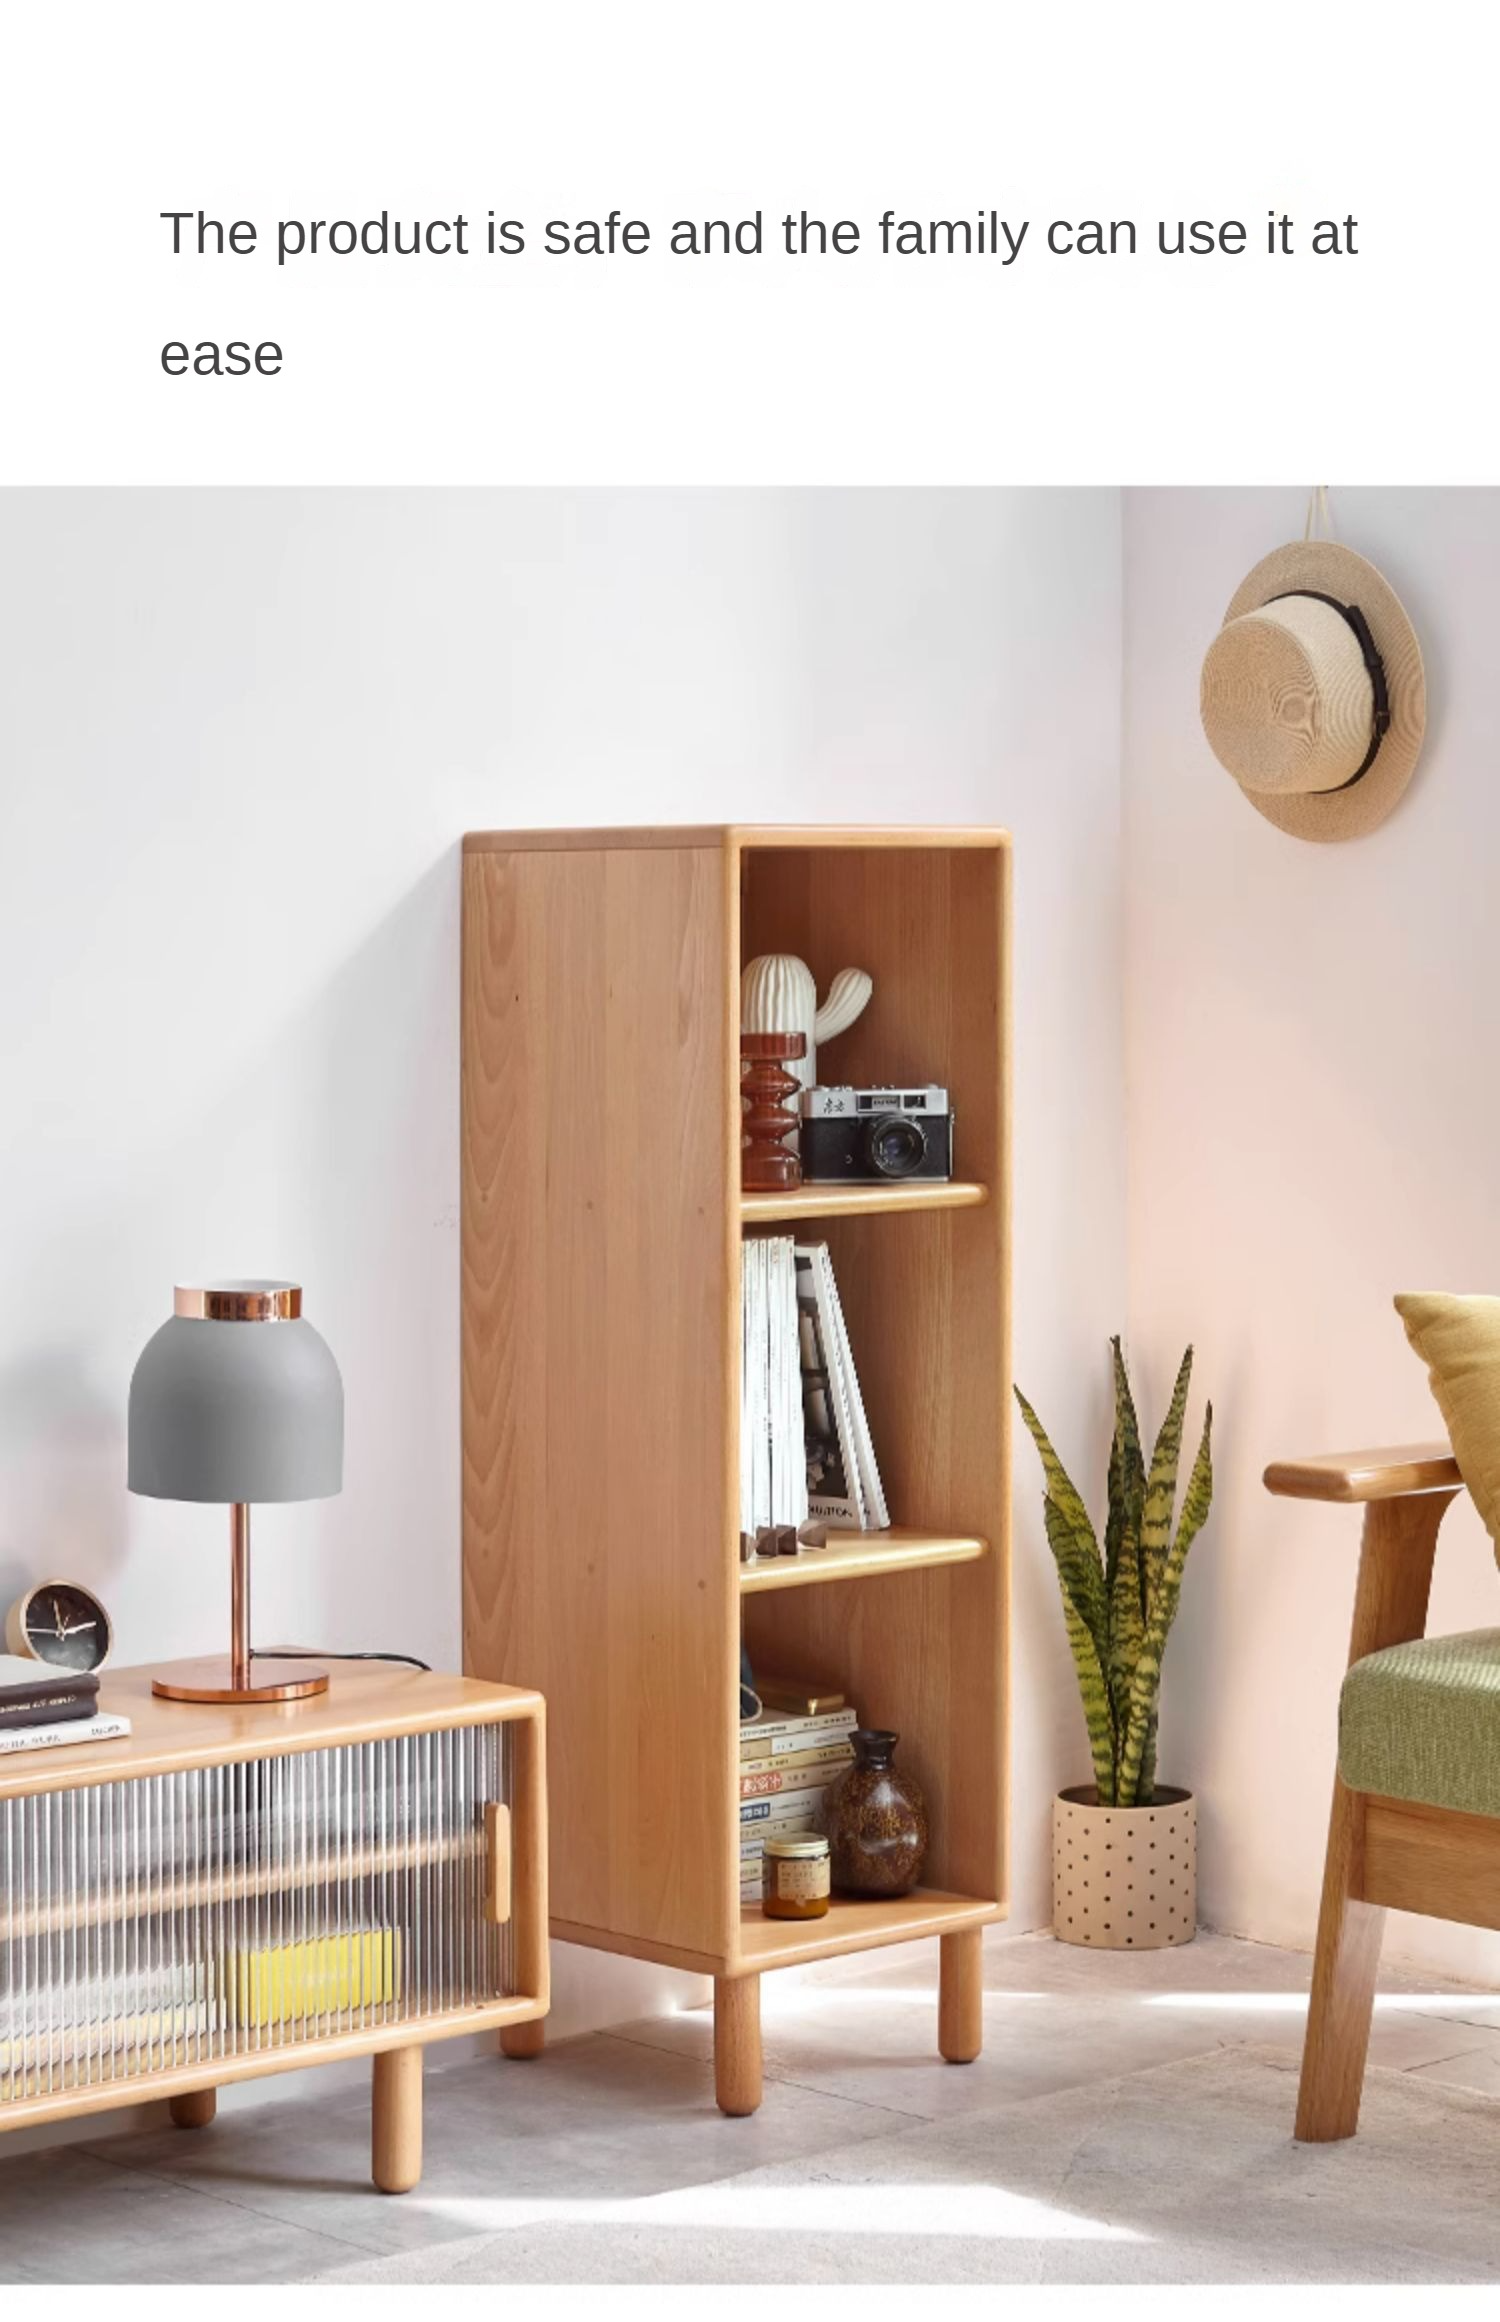 Beech solid wood Small bookshelf side cabinet"